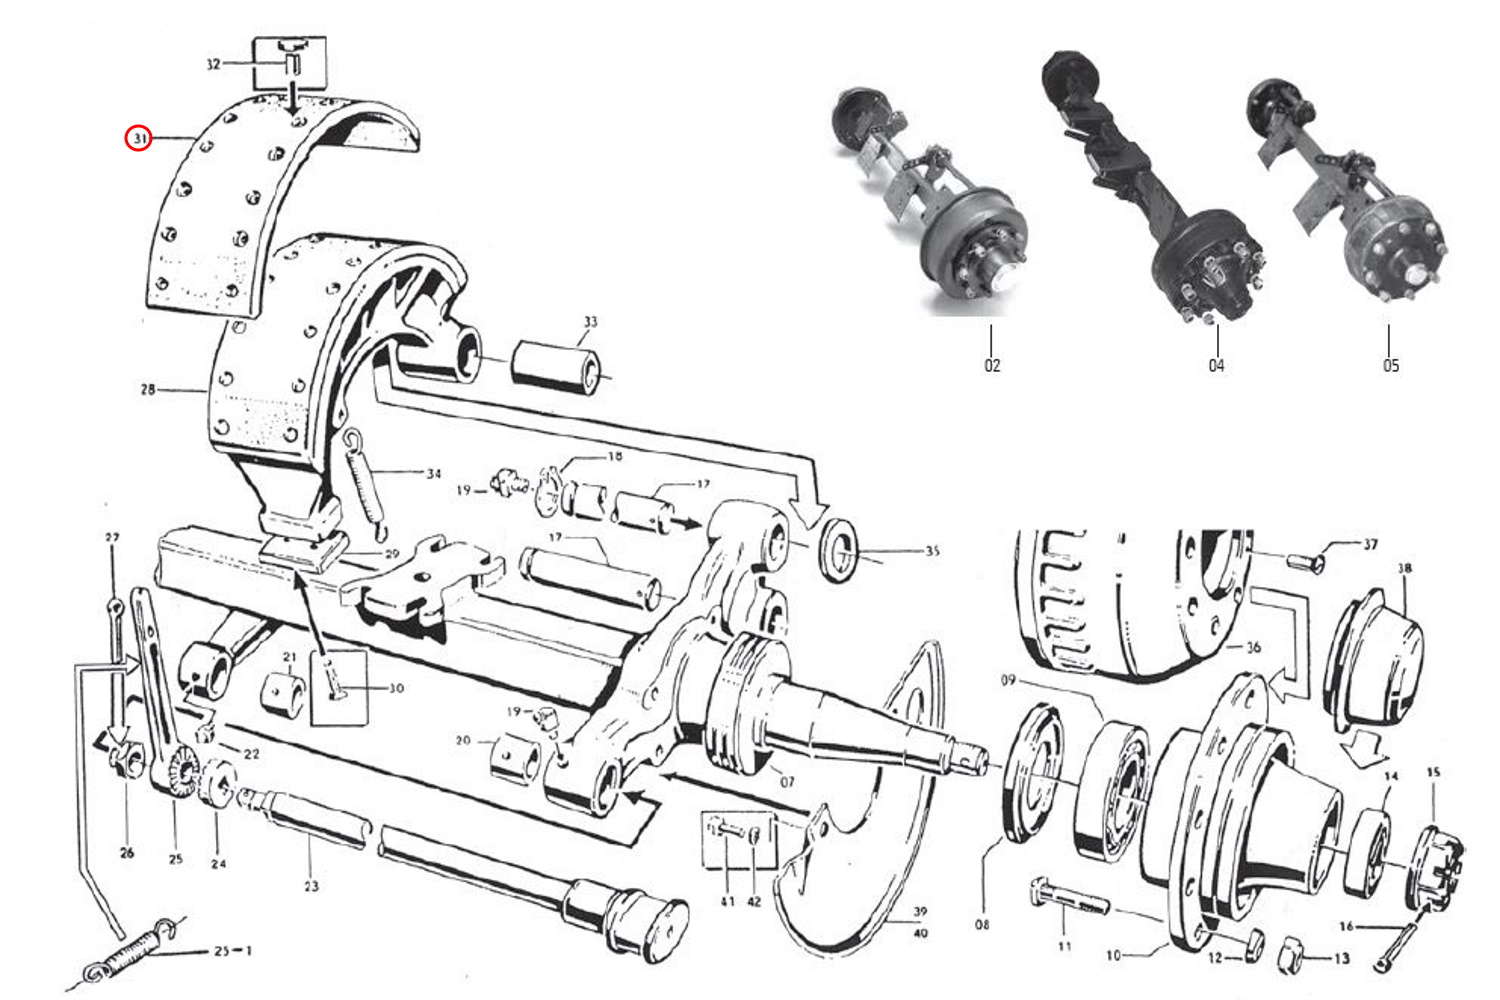 Bremsbeläge 140x8 (4 Stück) | HW60 & HW80 | 14-001-310 - 1